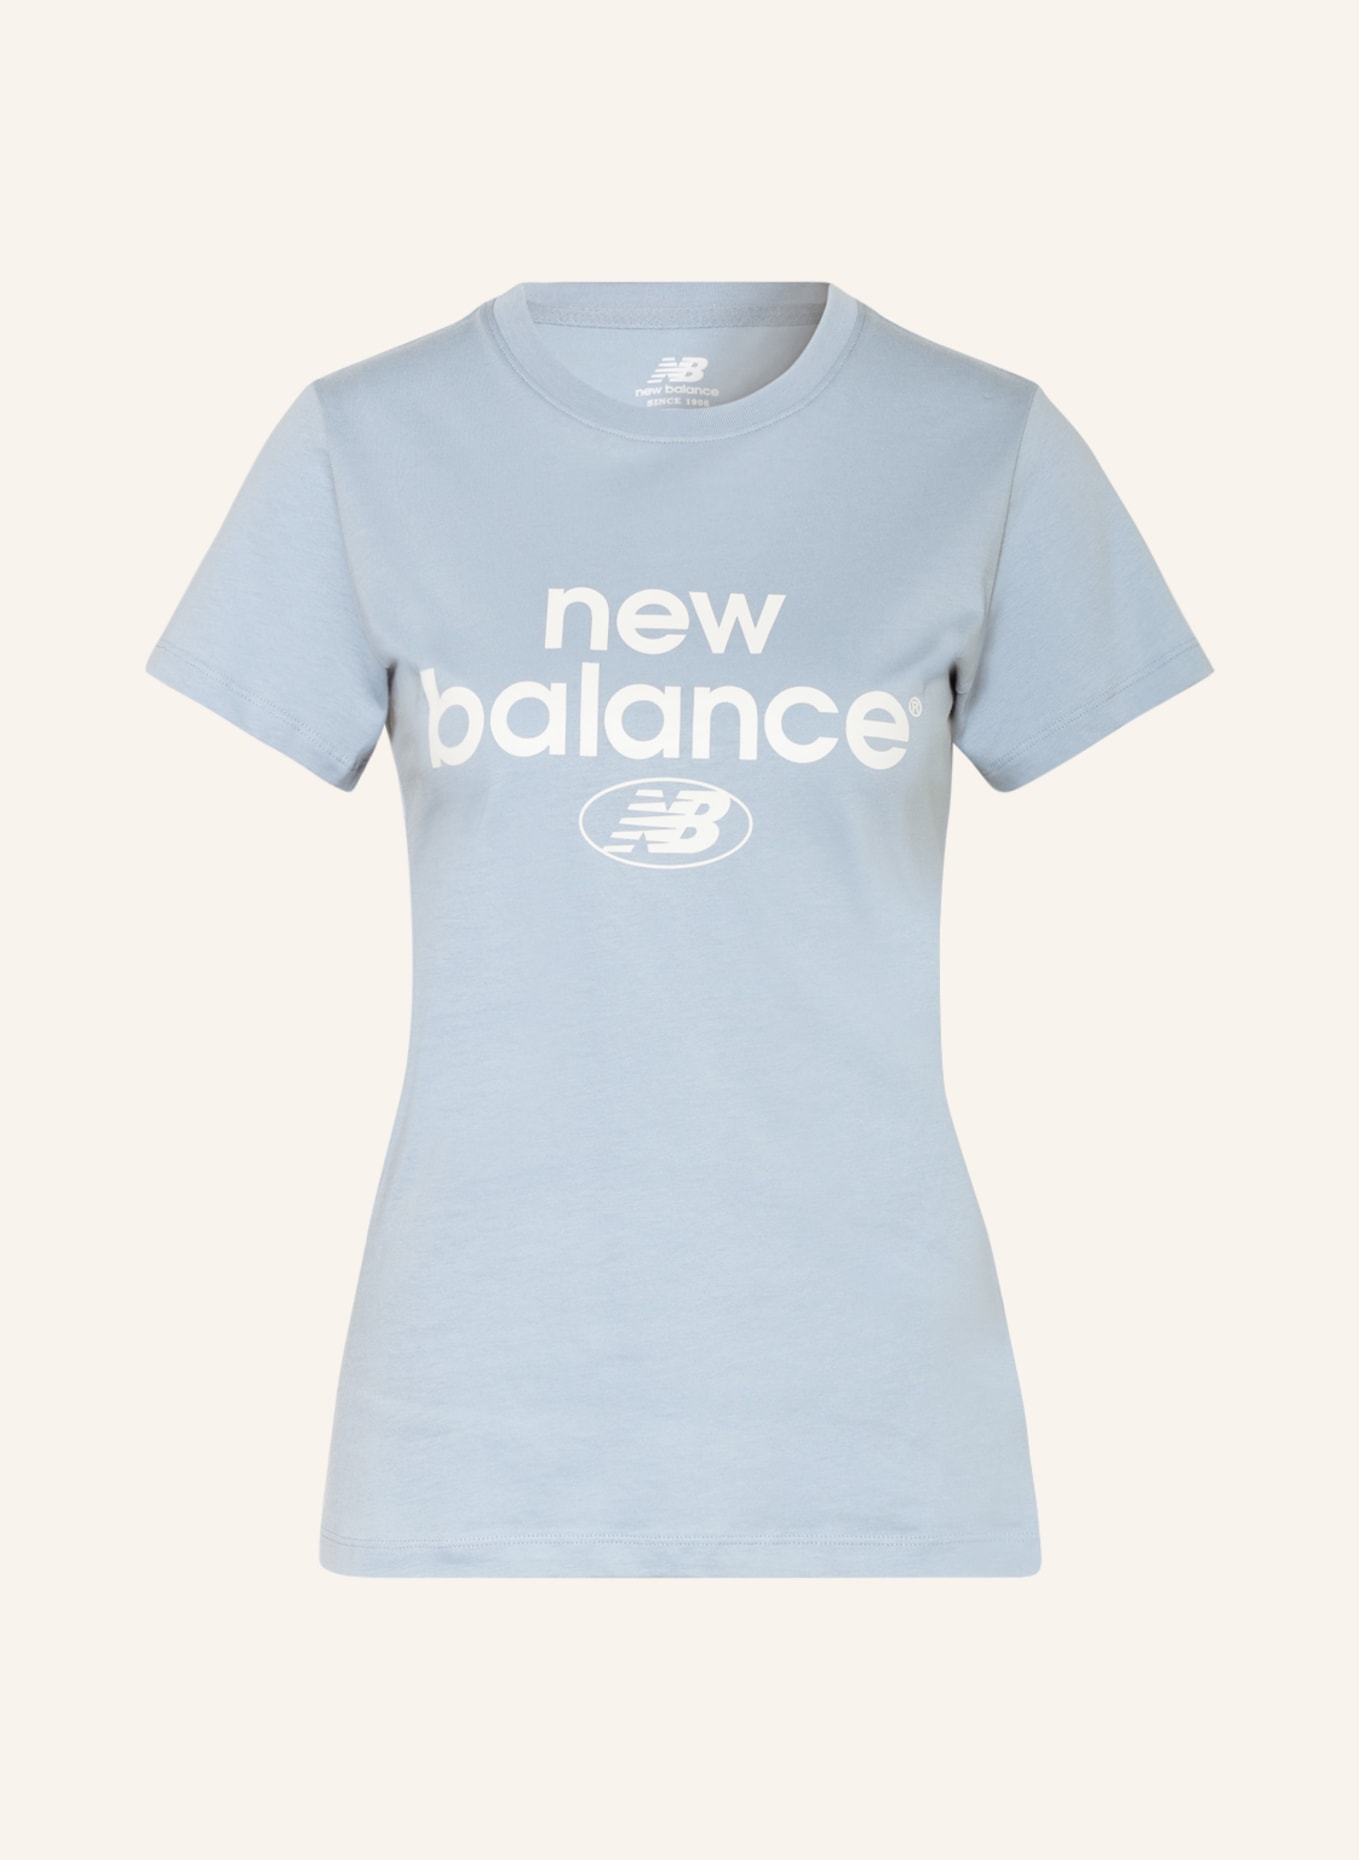 new balance T-shirt blue/ white light in ESSENTIALS